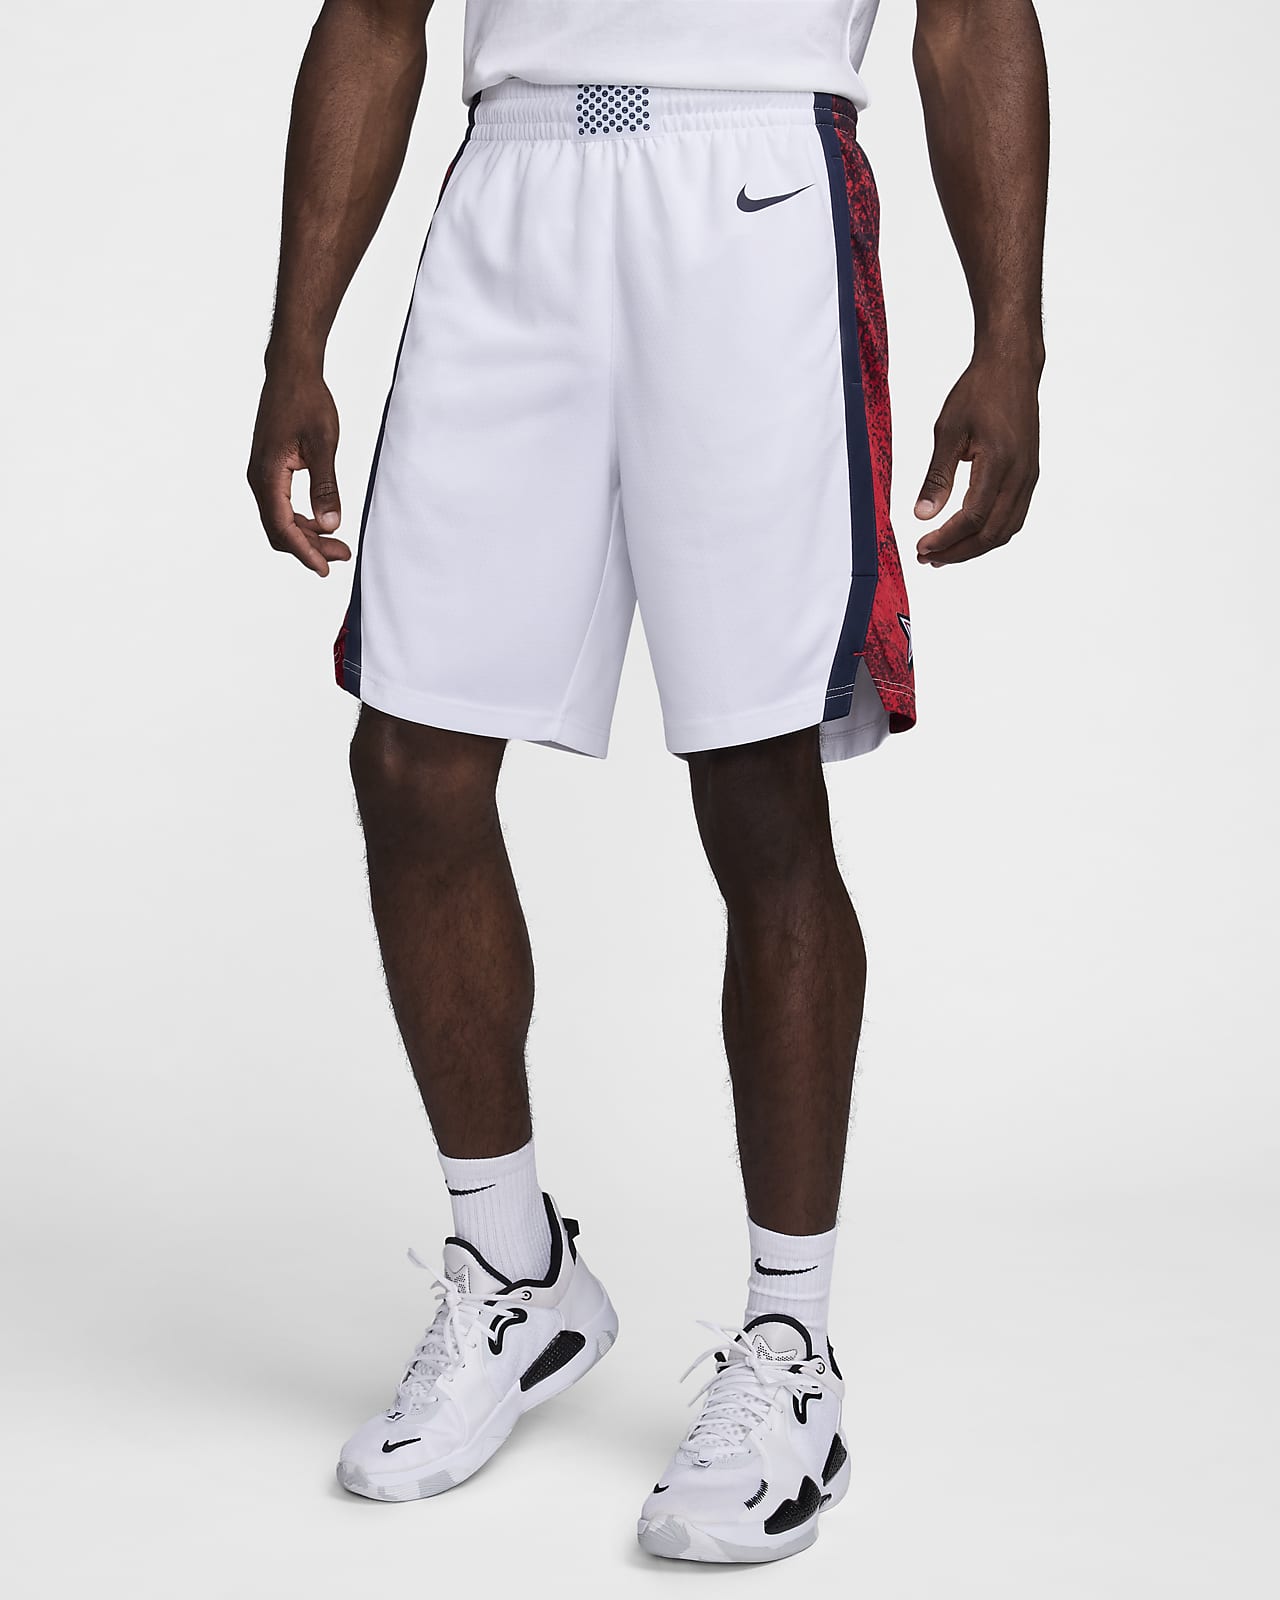 USA Limited Home Men's Nike Basketball Shorts